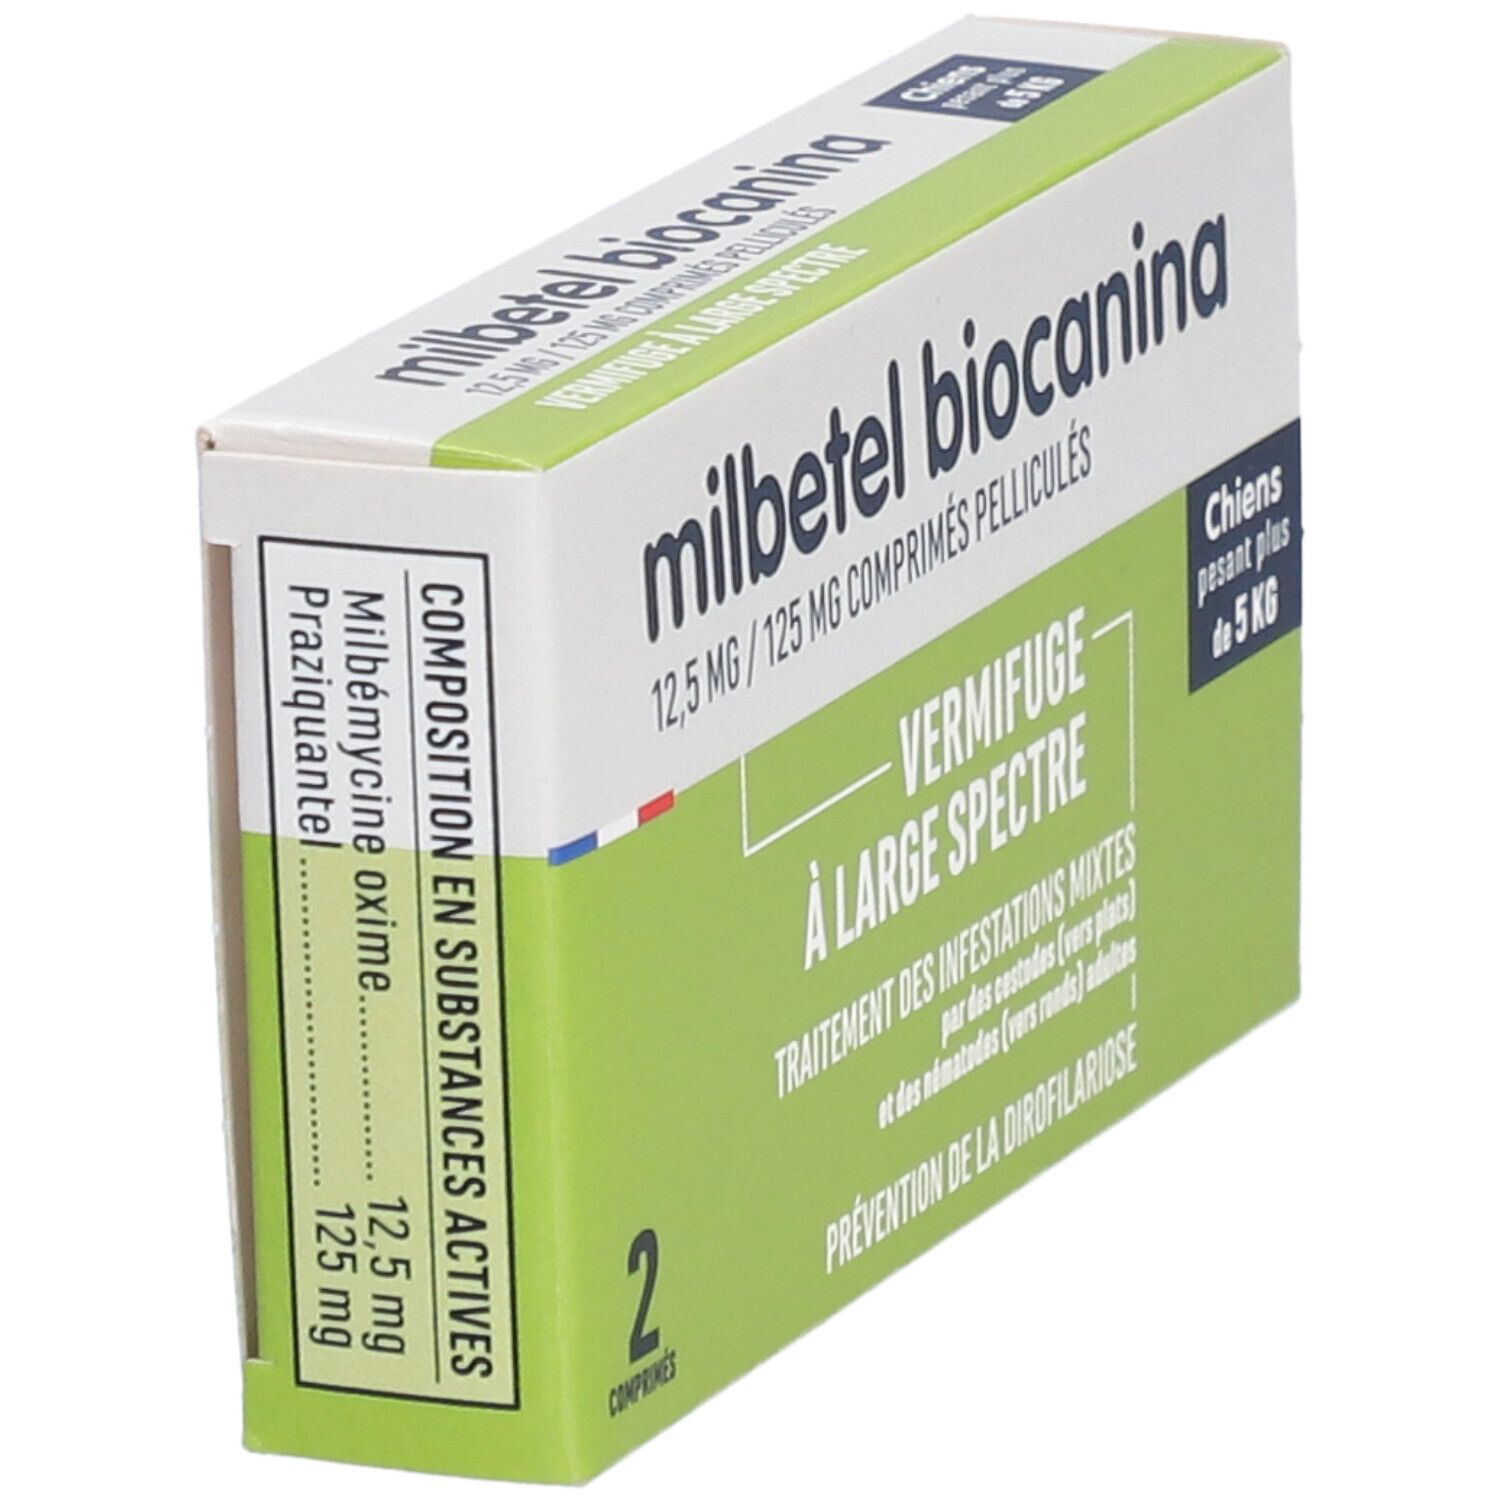 Milbetel Vermifuge Chien 2 Comprimés Biocanina en pharmacie